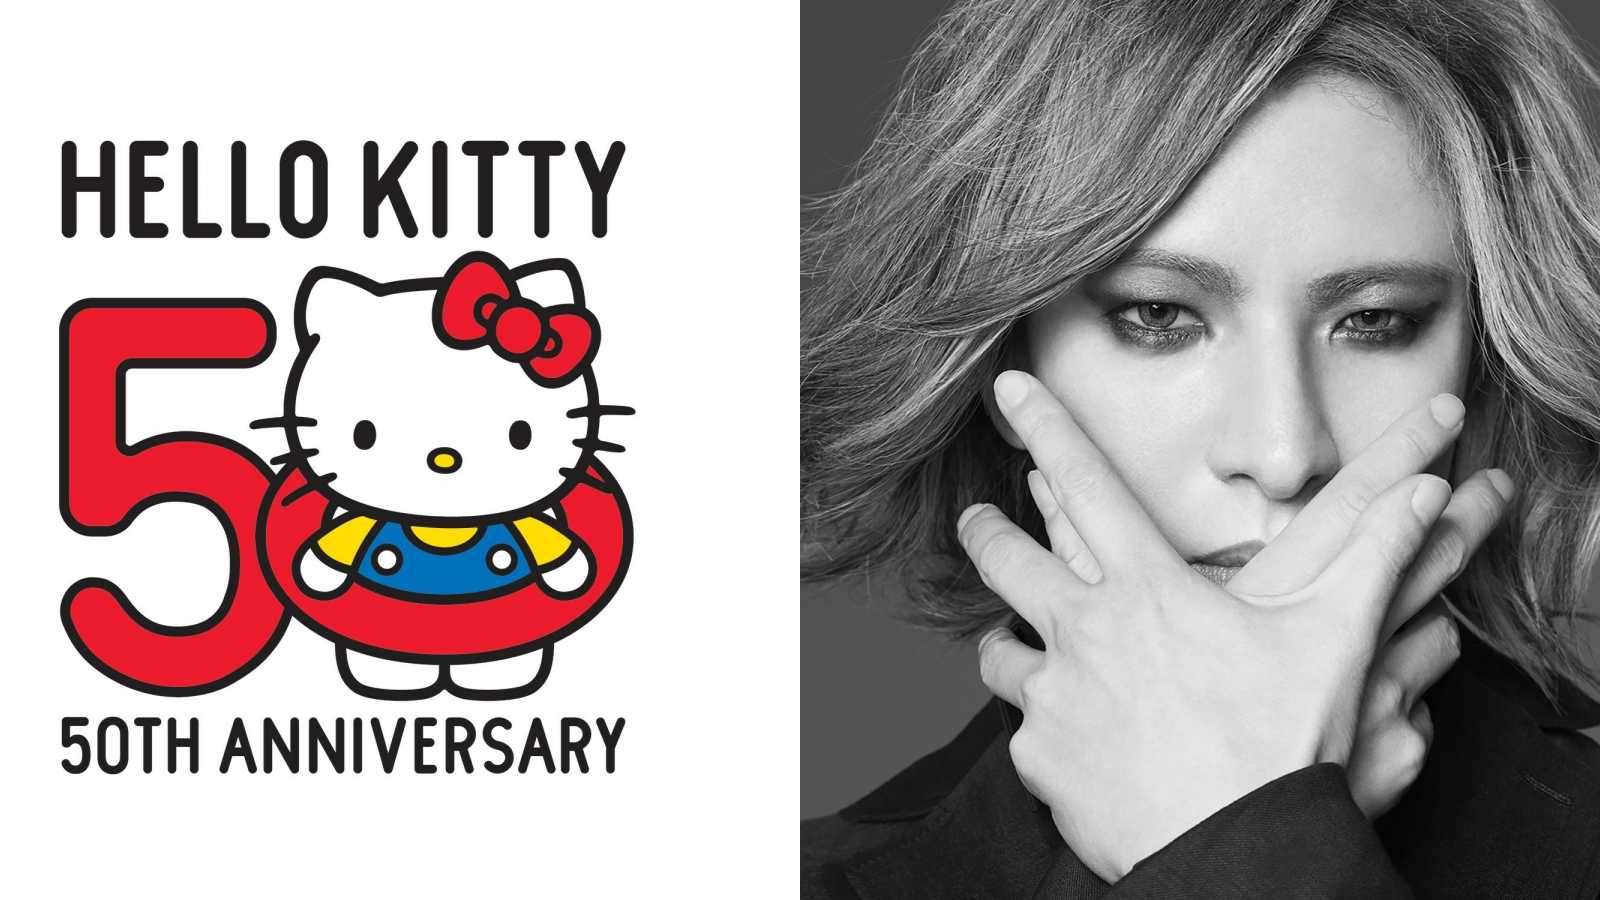 YOSHIKI irá compor e produzir a música-tema para o 50º aniversário da Hello Kitty © Sanrio Co., Ltd. / YOSHIKI